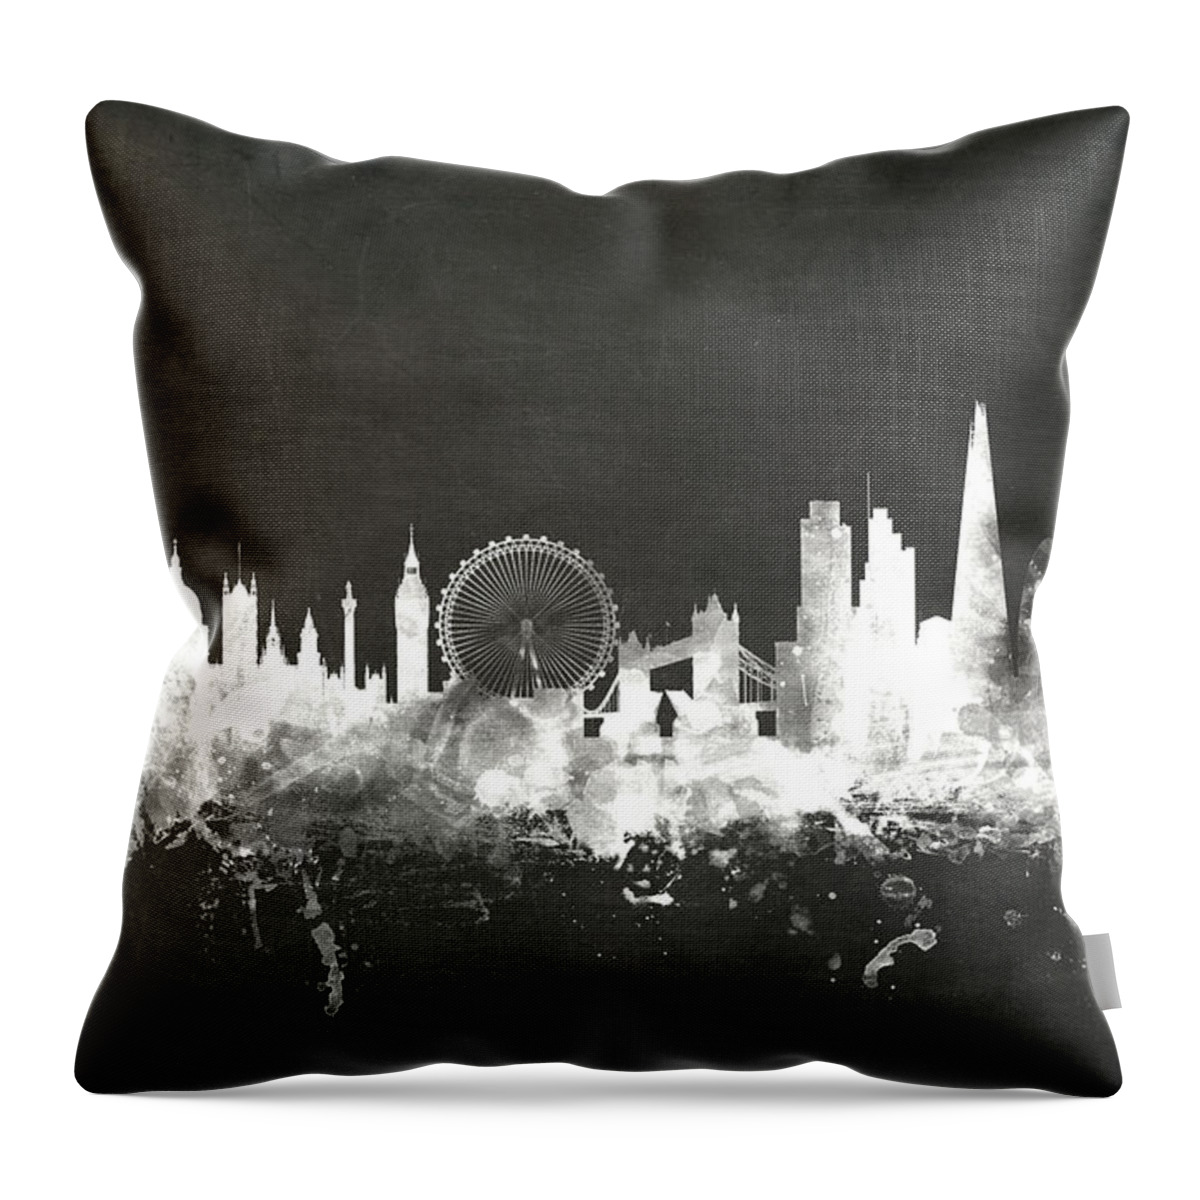 London Throw Pillow featuring the digital art London England Skyline by Michael Tompsett